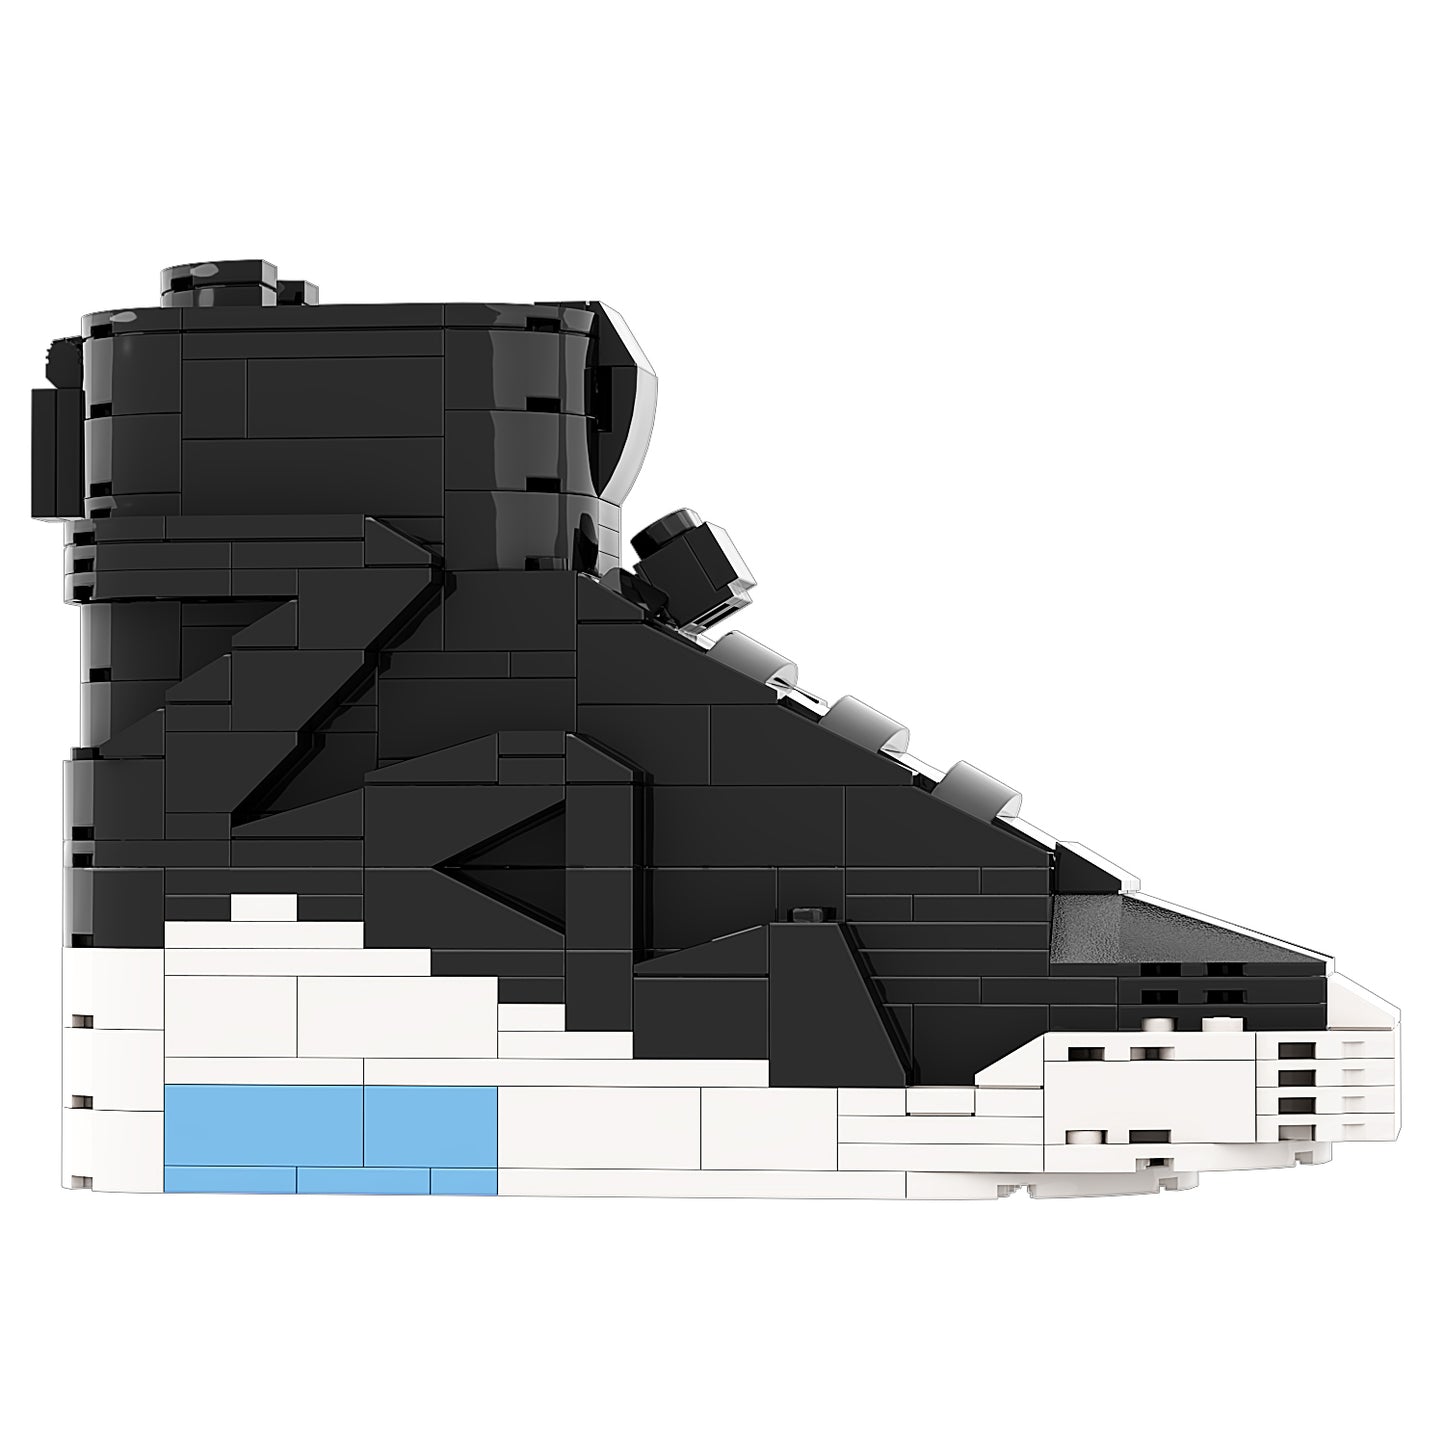 REGULAR "Air Fear of God Black" Sneaker Bricks with Mini Figure